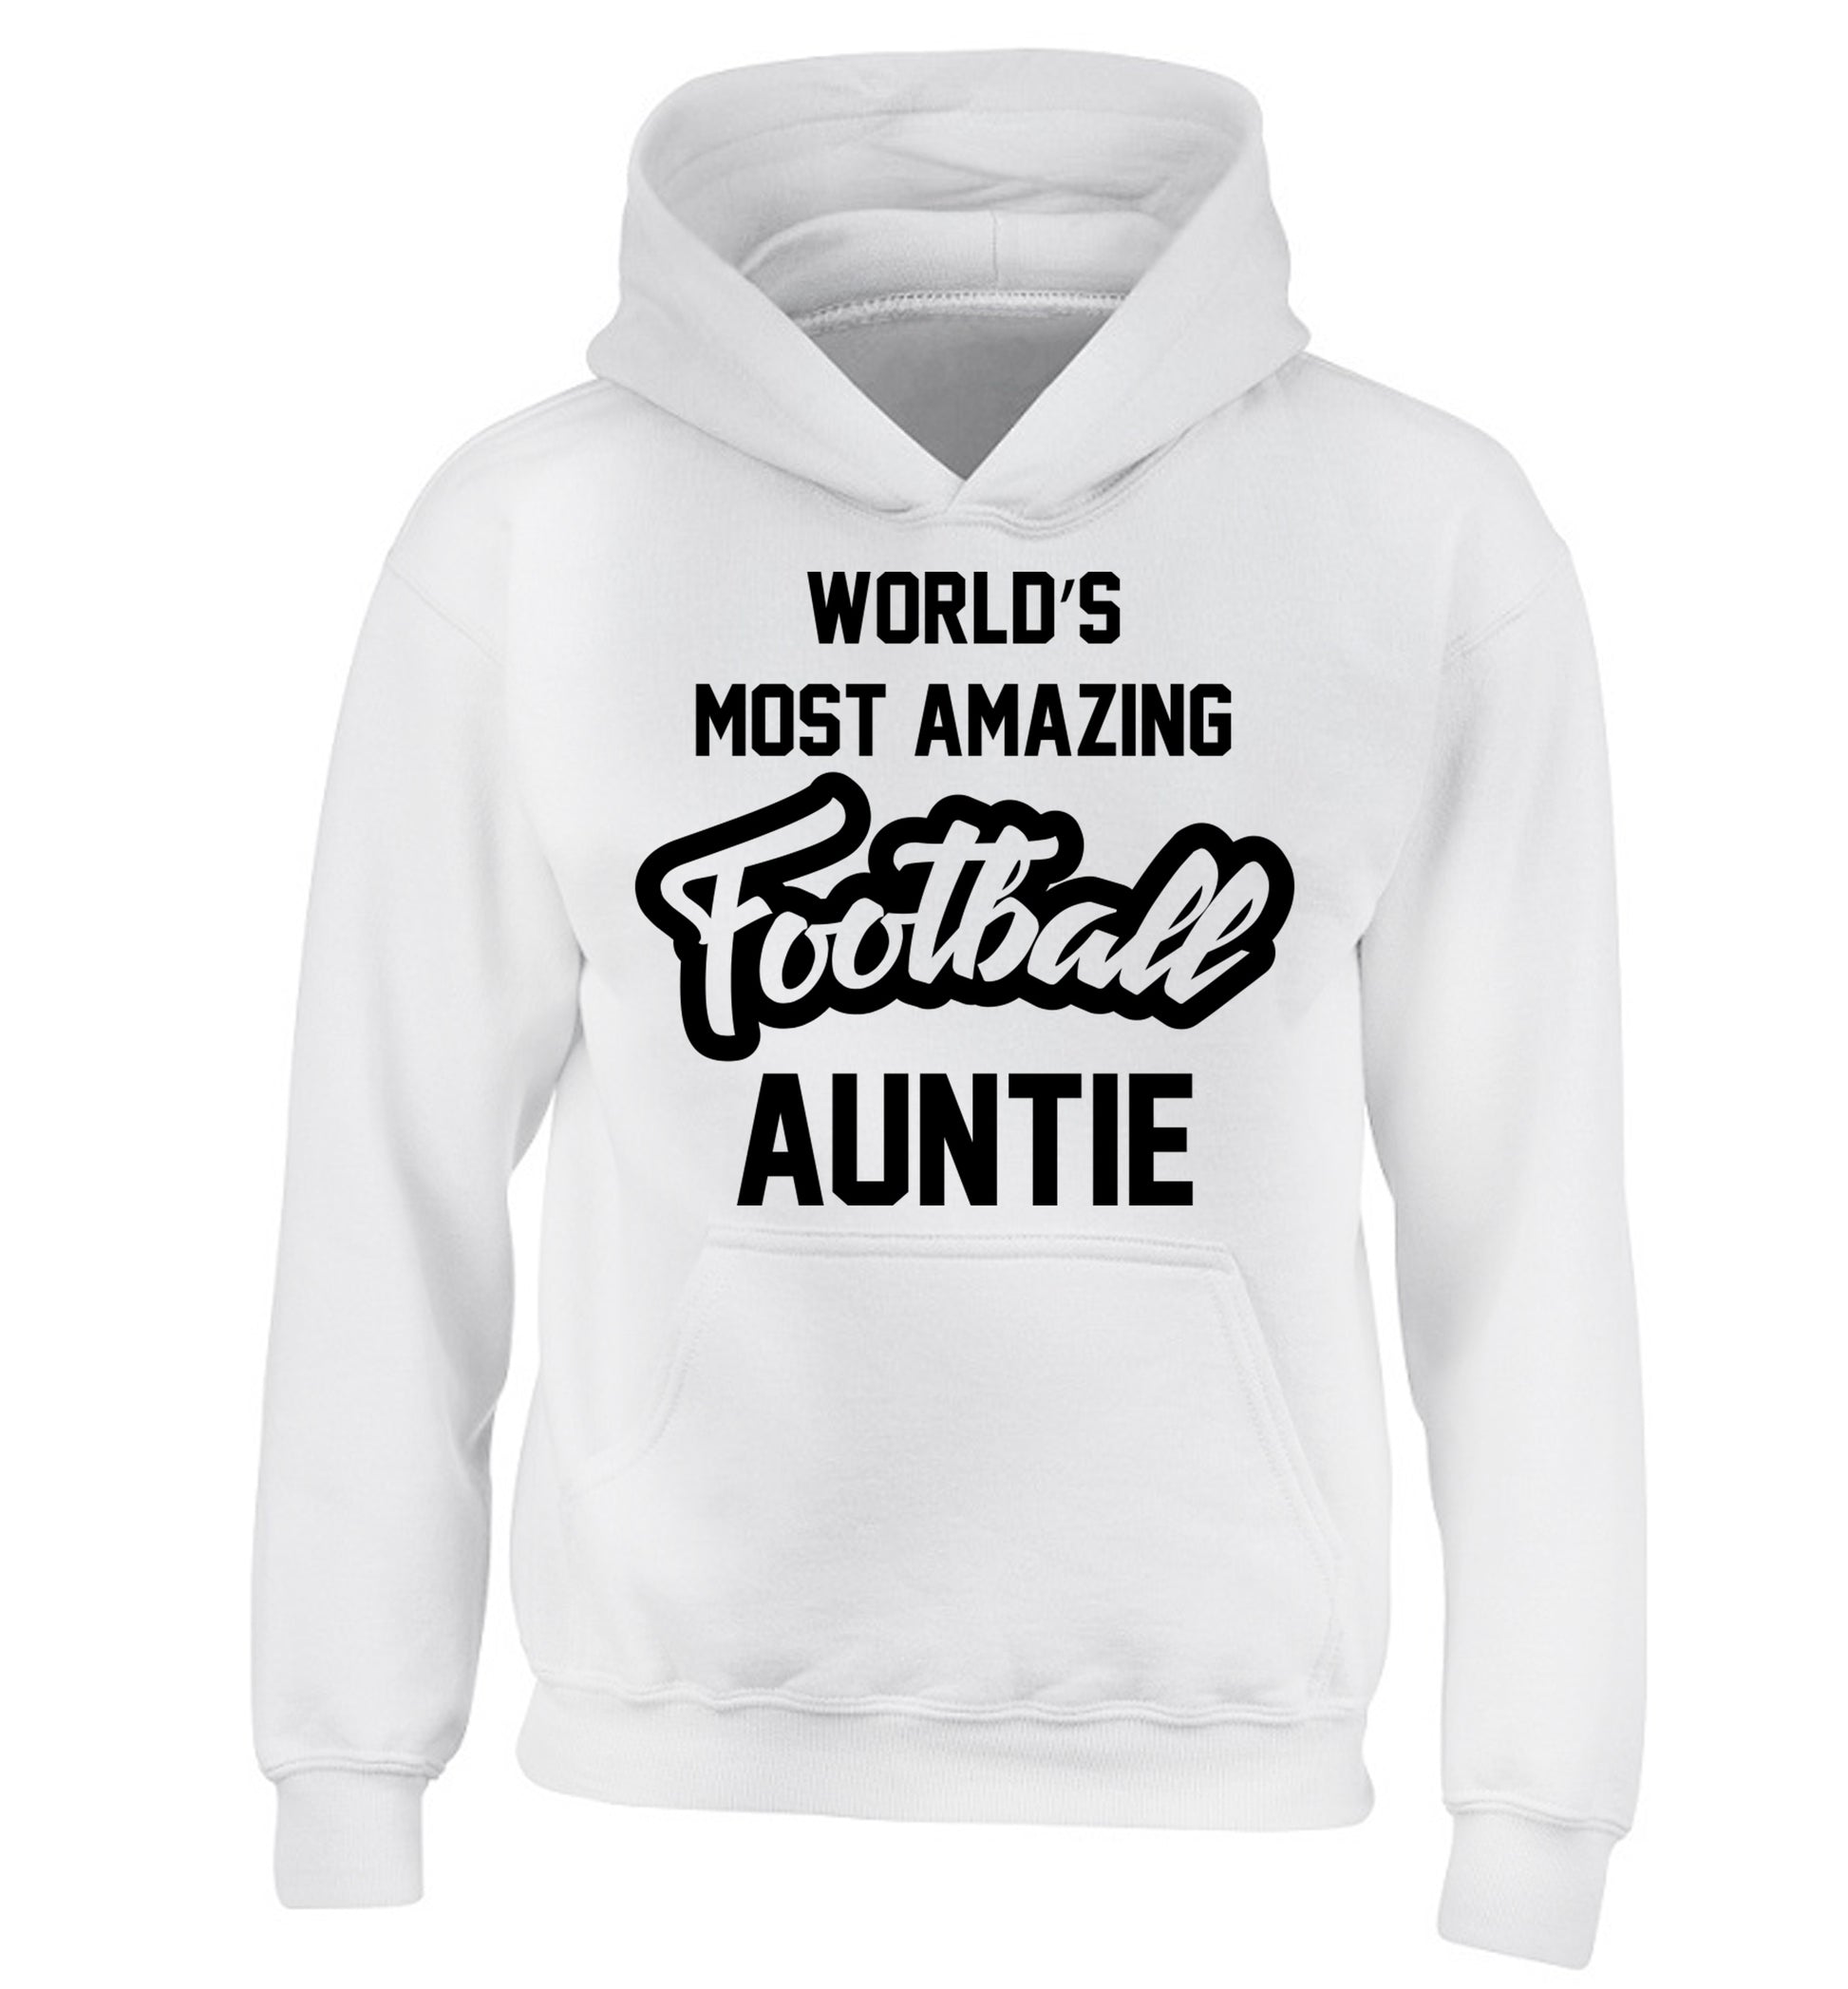 Worlds most amazing football auntie children's white hoodie 12-14 Years